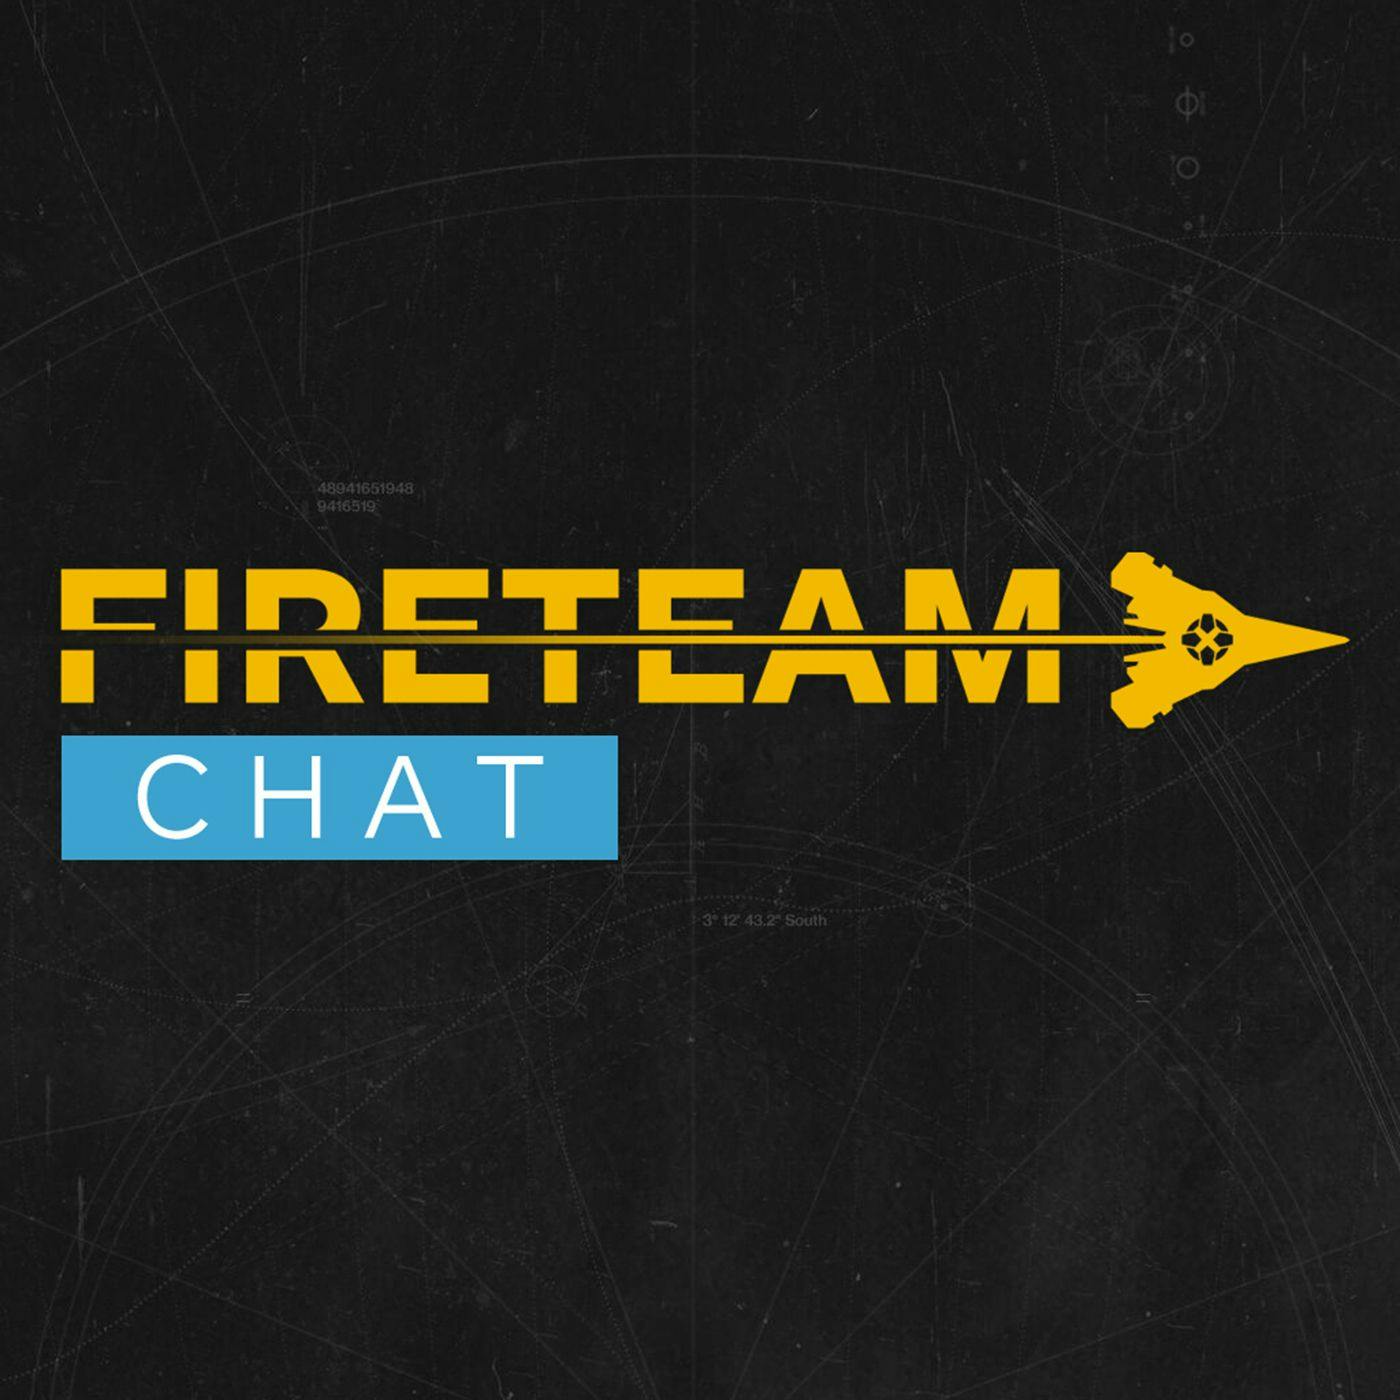 Destiny 2 Beyond Light Roadmap Revealed - Fireteam Chat Ep. 283